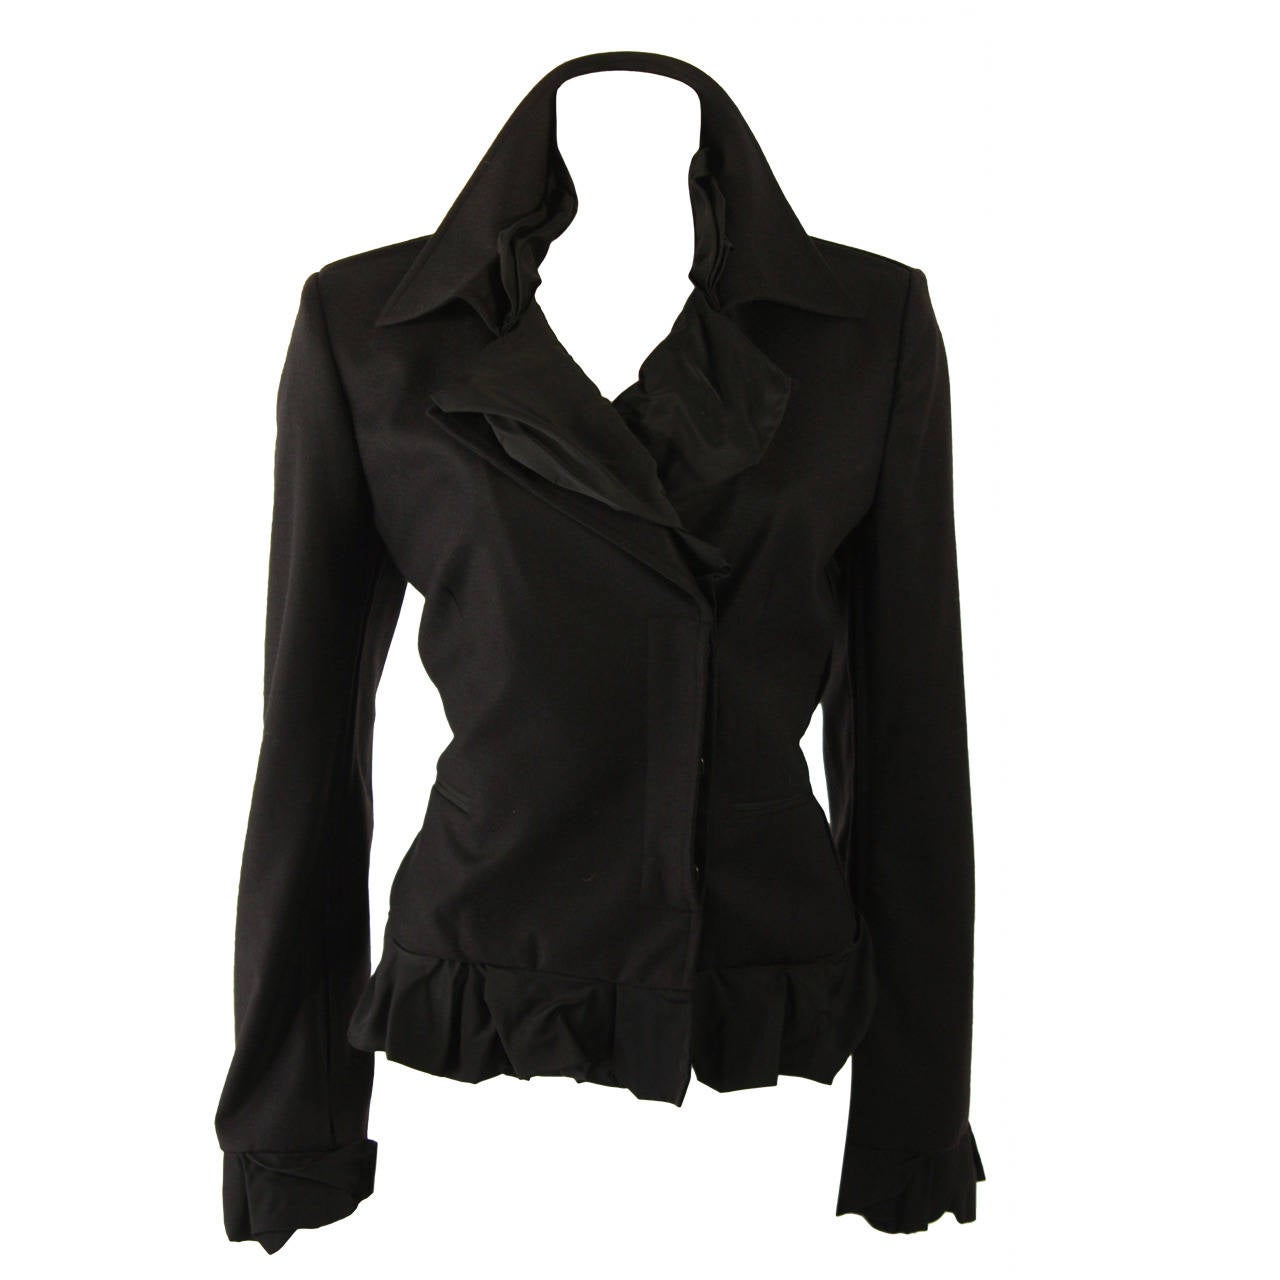 Yves Saint Laurent Black Wool Jacket with Silk Trim Size 42